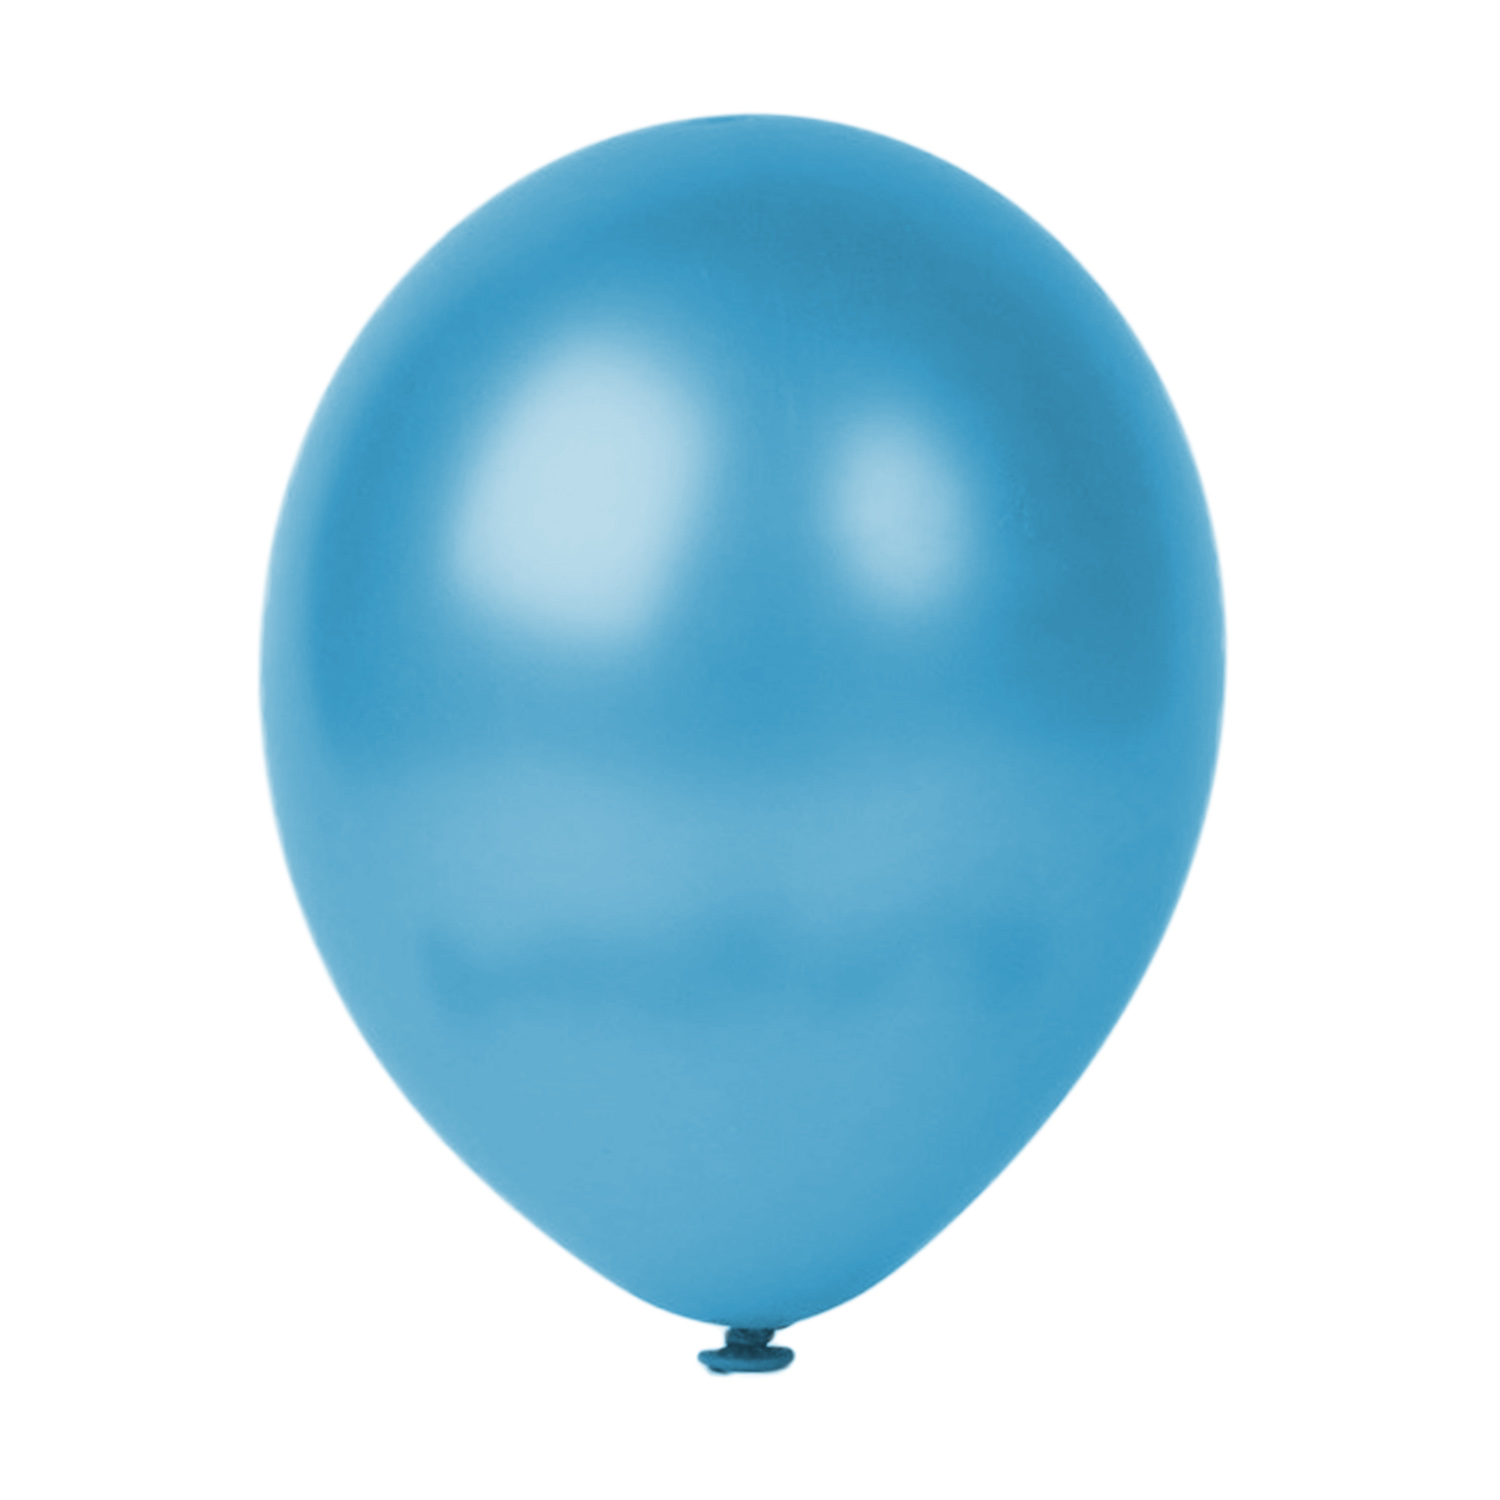 100er SET - Latex Luftballon - 12inch - Hellblau - Metallic (glänzend)